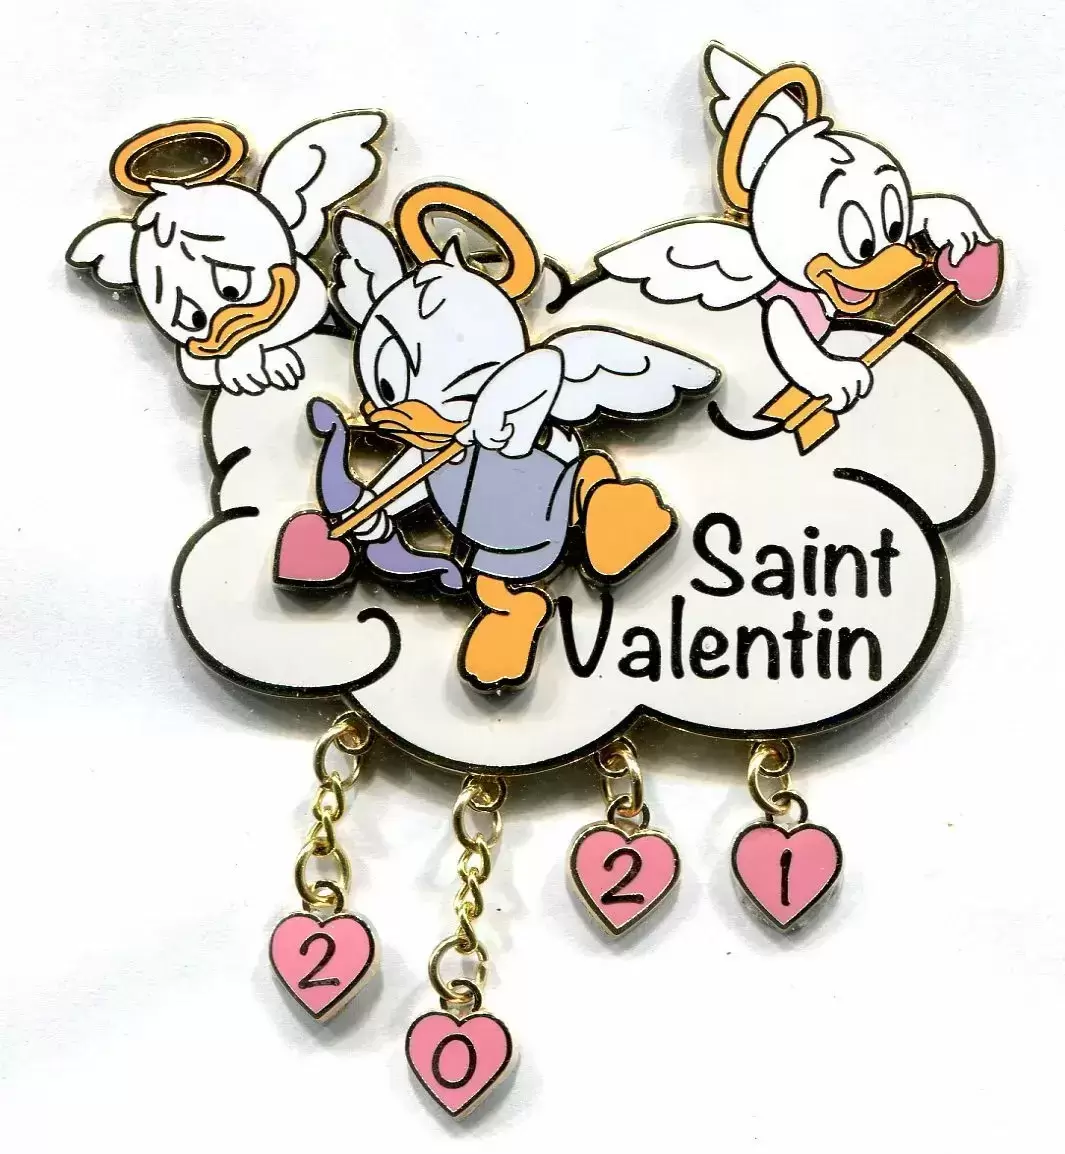 Saint Valentin - St Valentin 2021